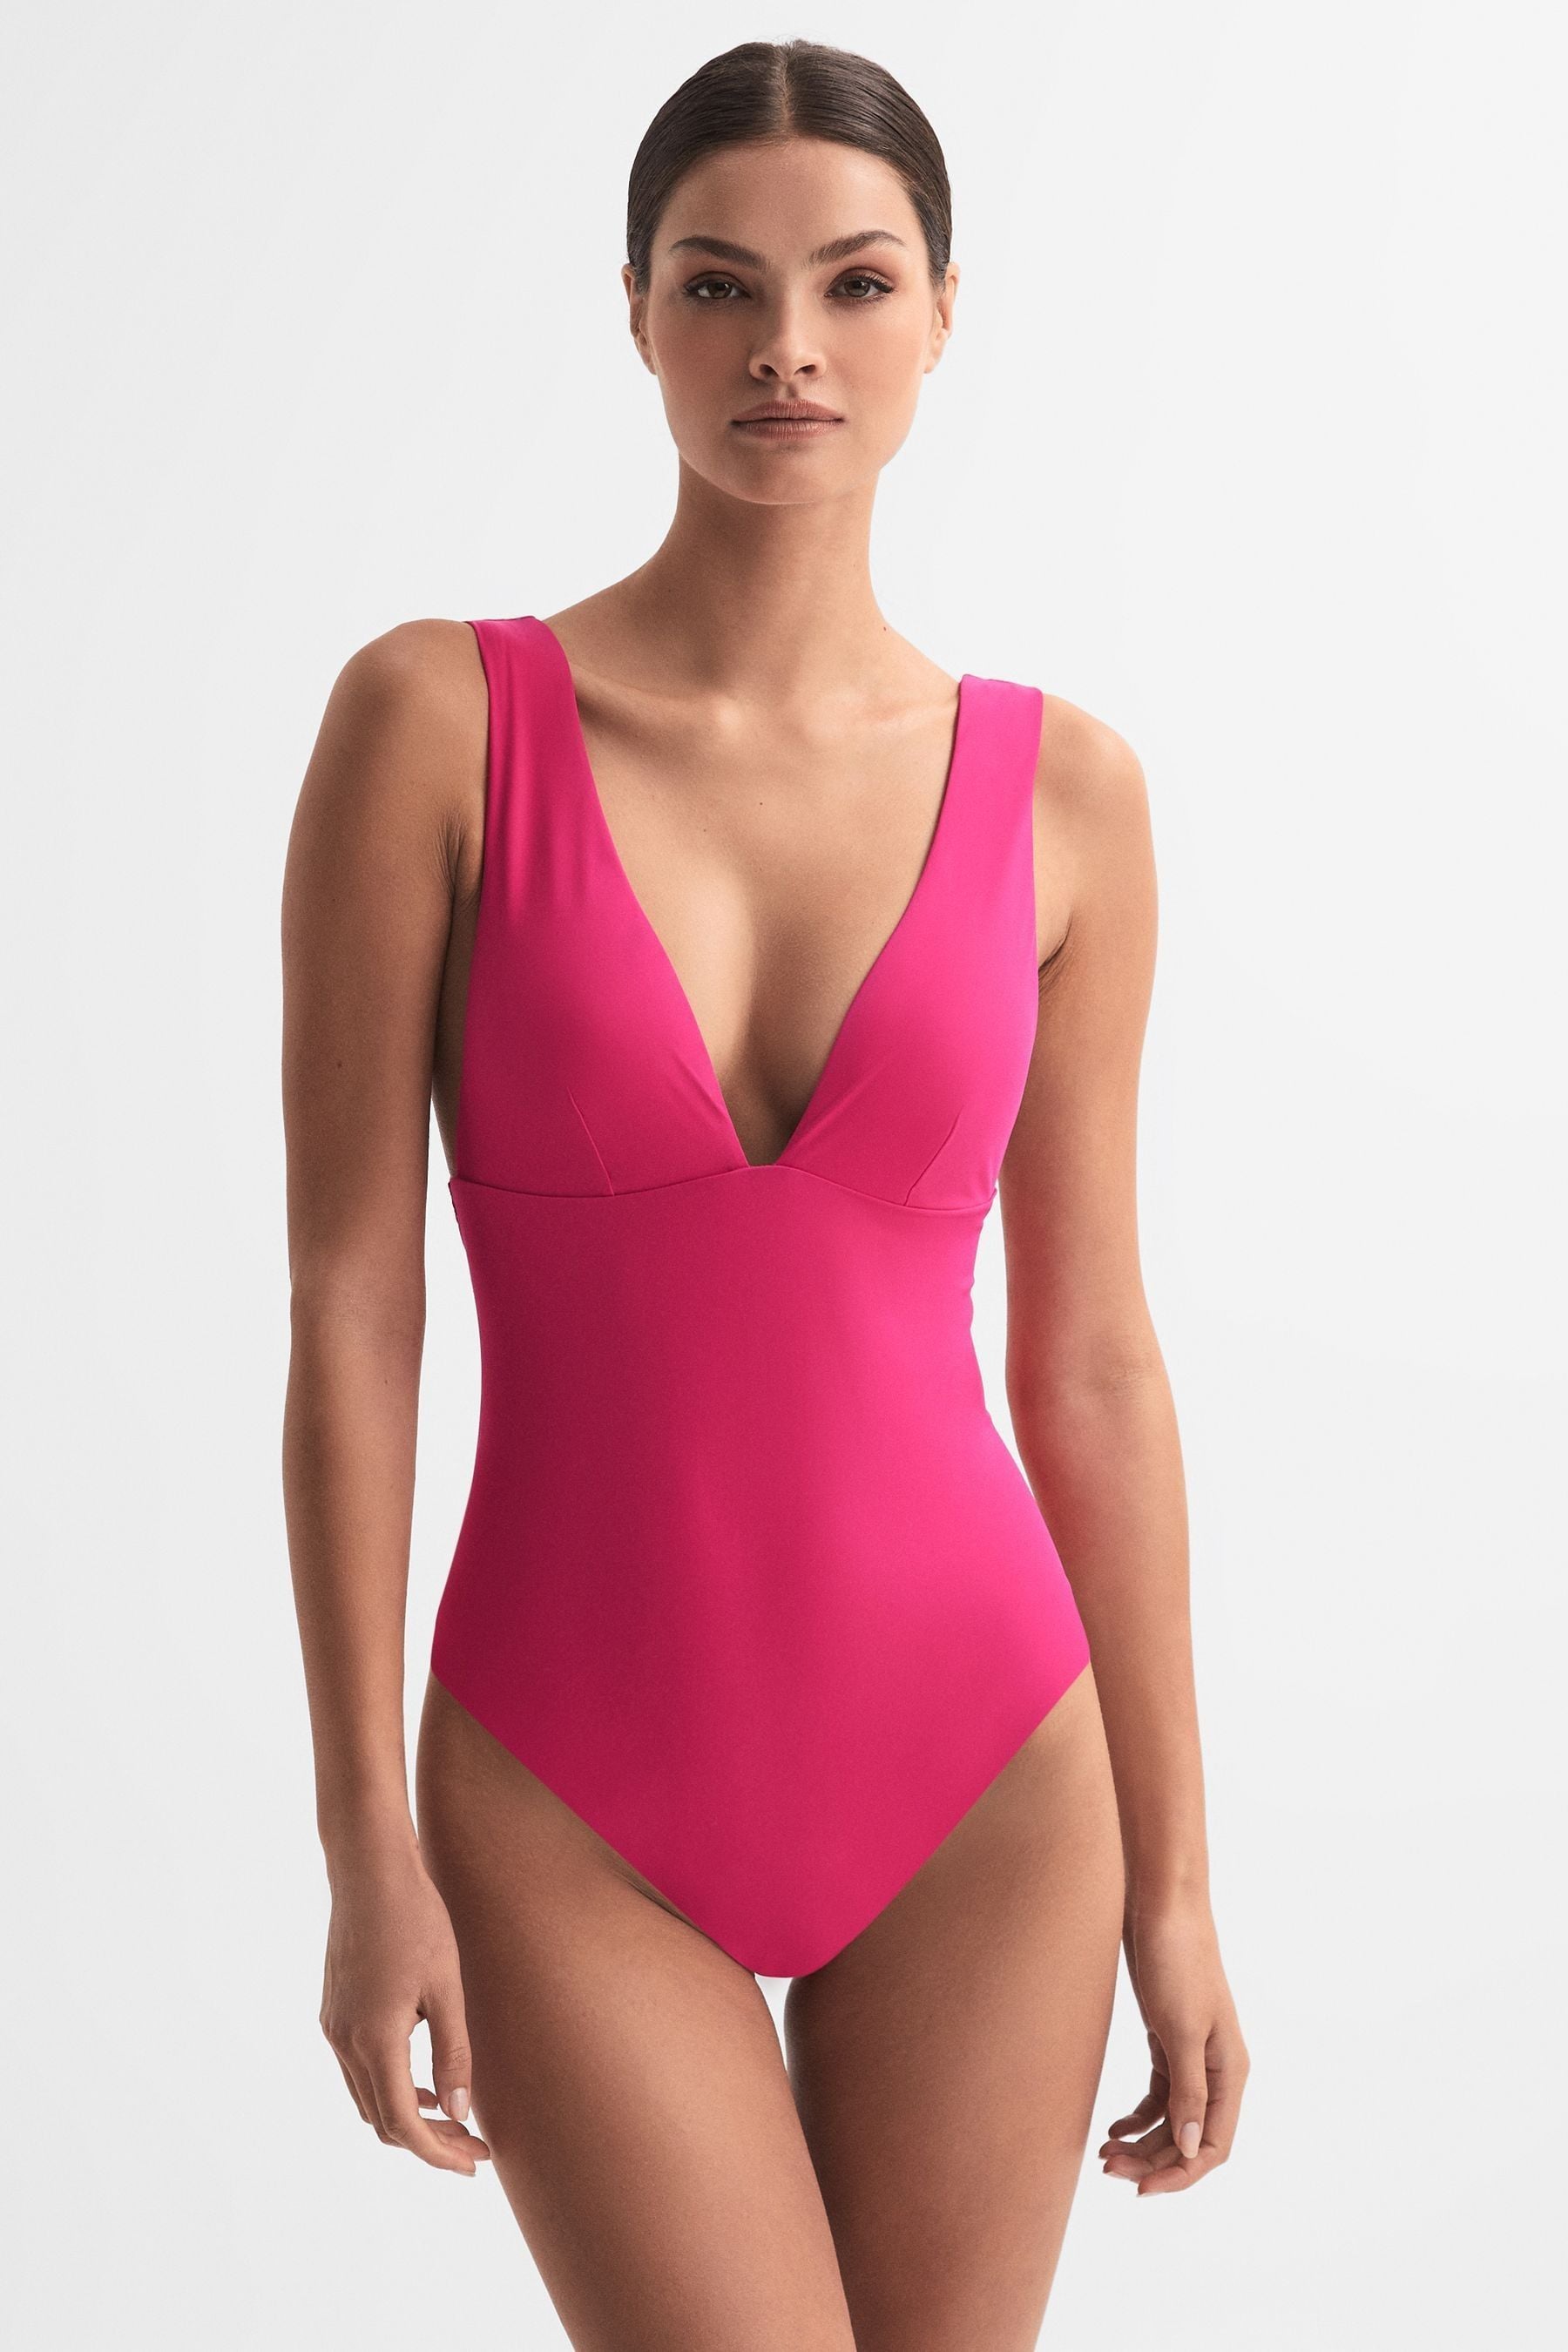 Reiss Luna - Pink Italian Fabric Swimsuit, Us 2